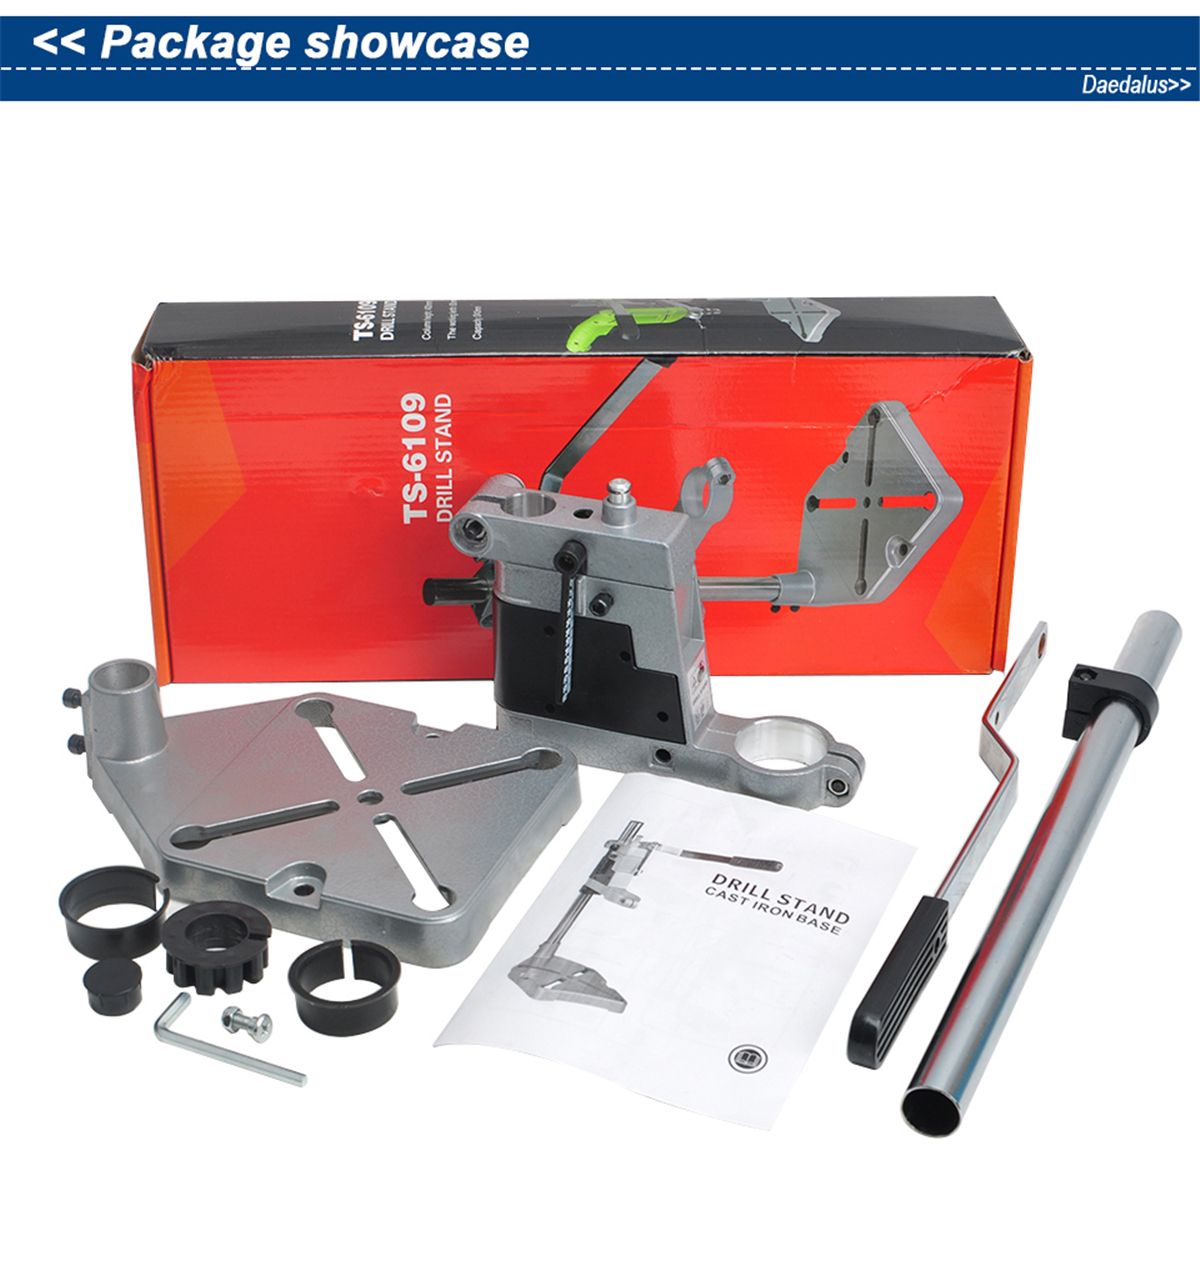 MINIQ-6109-Aluminum-Drill-Stand-Holding-Holder-Bracket-Single-Head-Rack-Drill-Holder-Grinder-Accesso-1767304